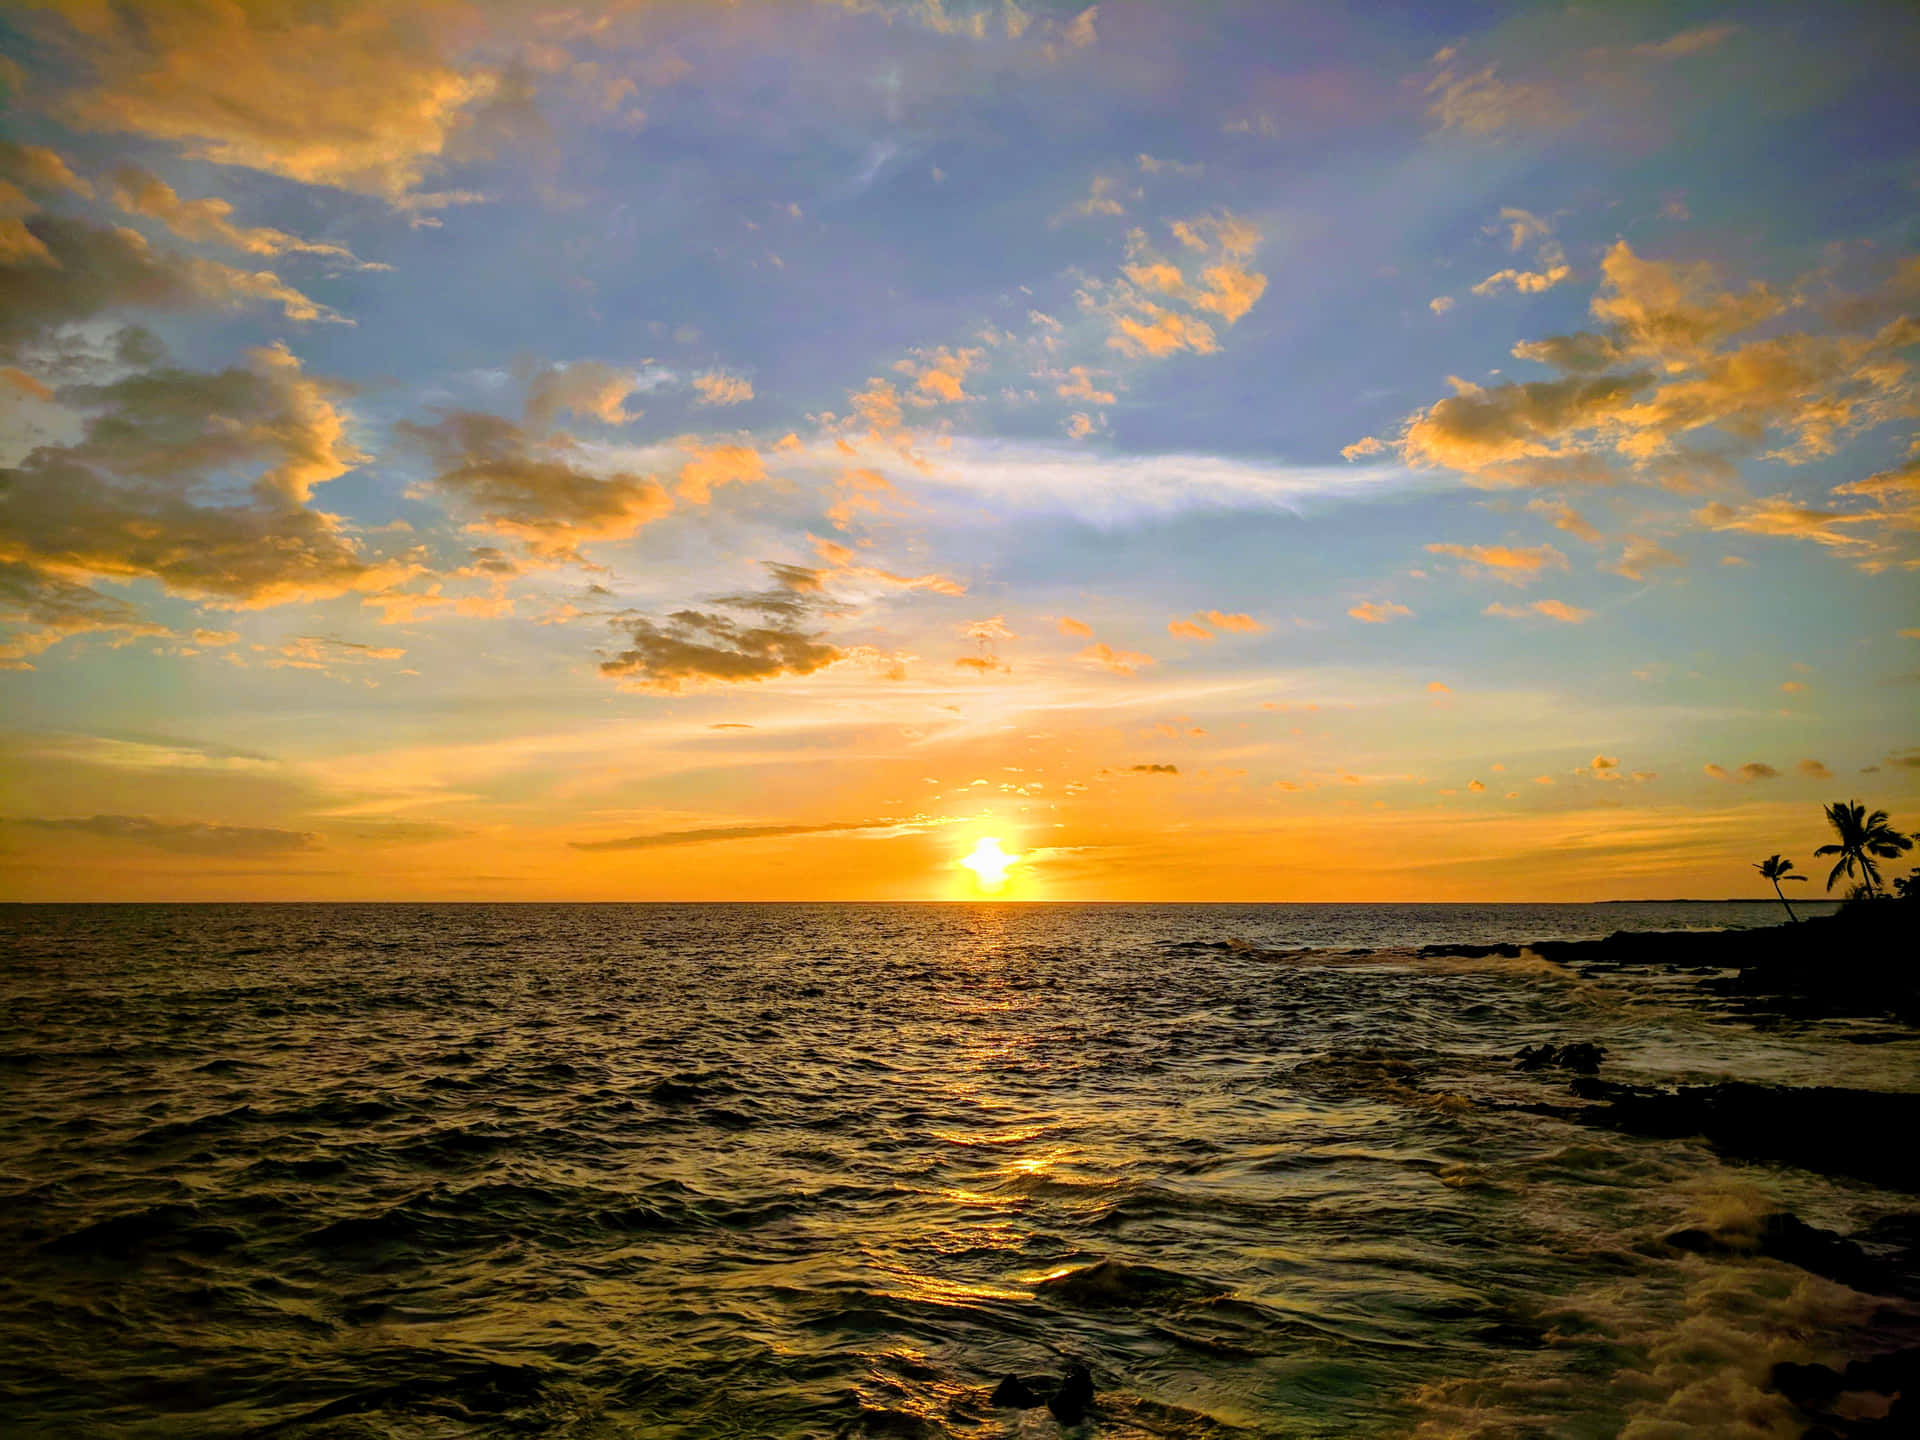 Hawaiian Sunset In The Ocean Pictures